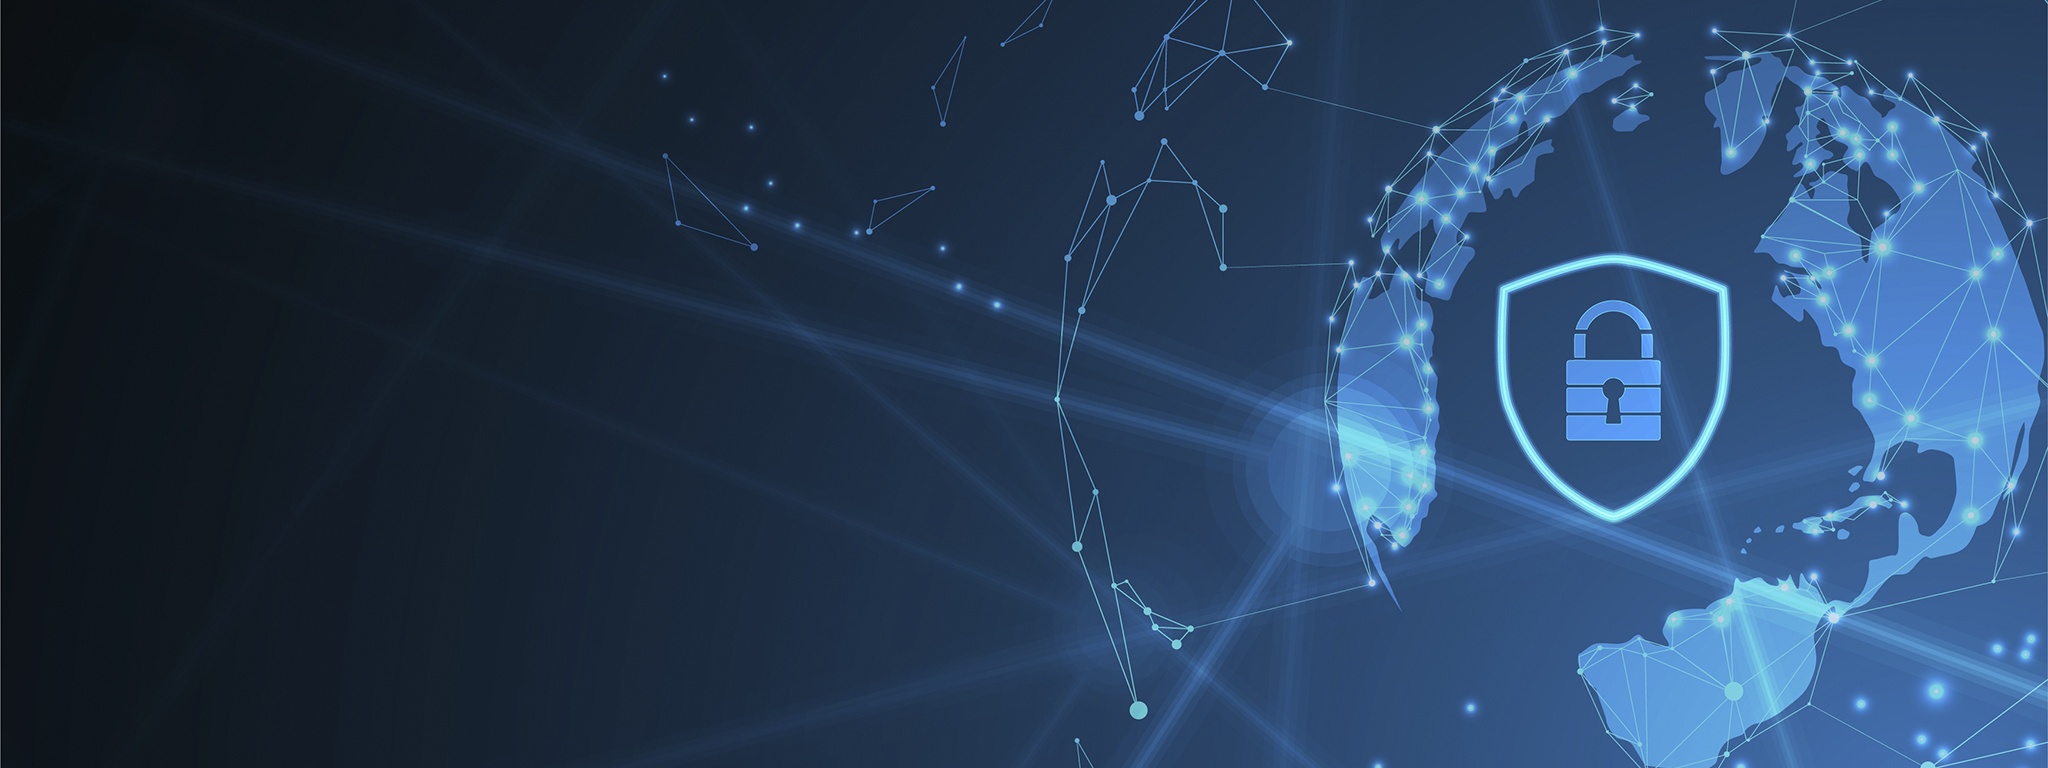 Ilustrasi jalur digital internet berwarna biru pada bola dunia dengan sebuah gembok dan perisai